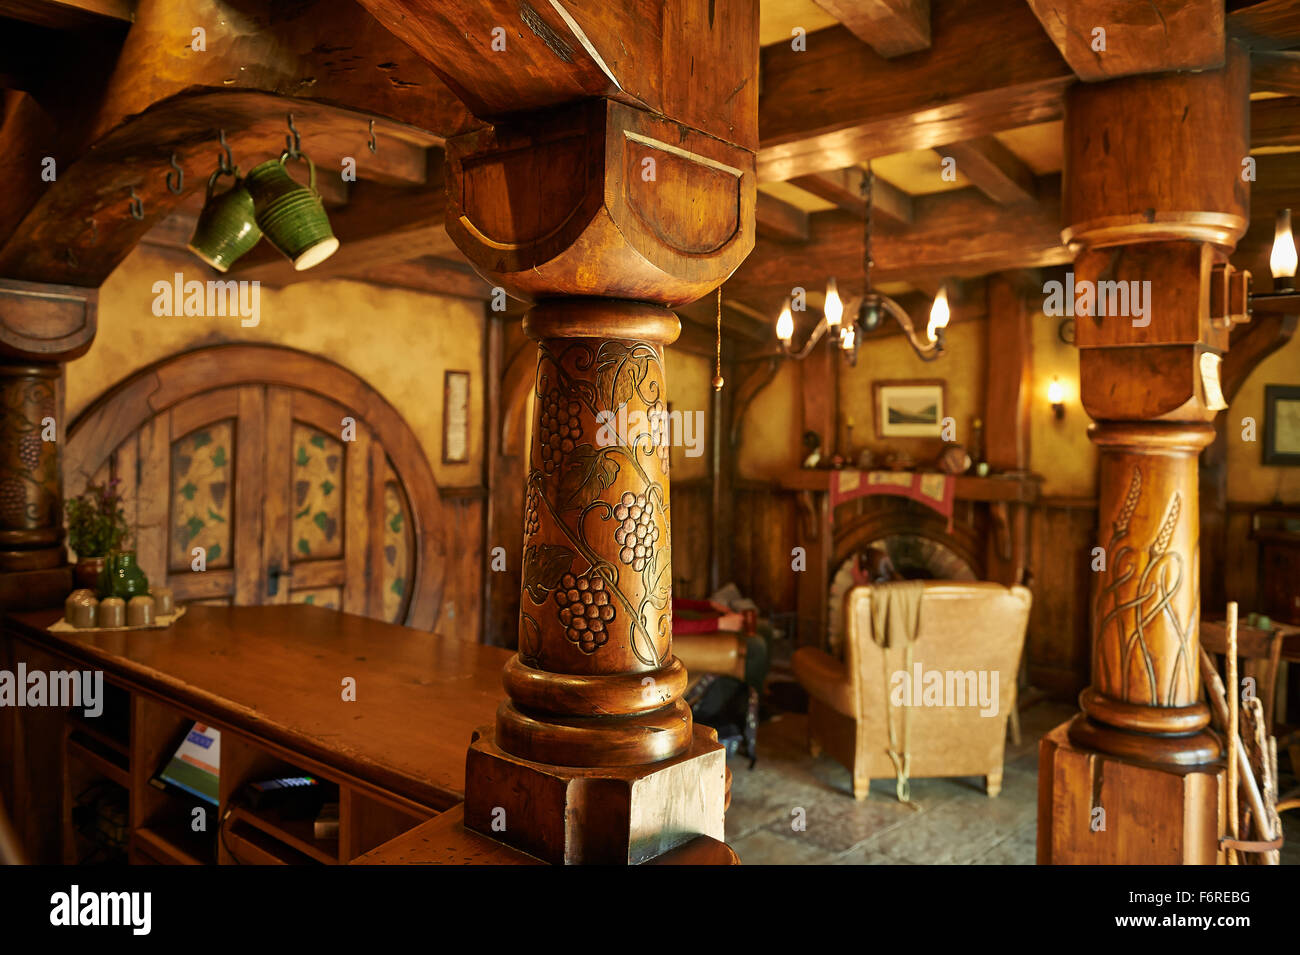 Internal image of The Green Dragon Inn, Hobbiton movie set. Stock Photo